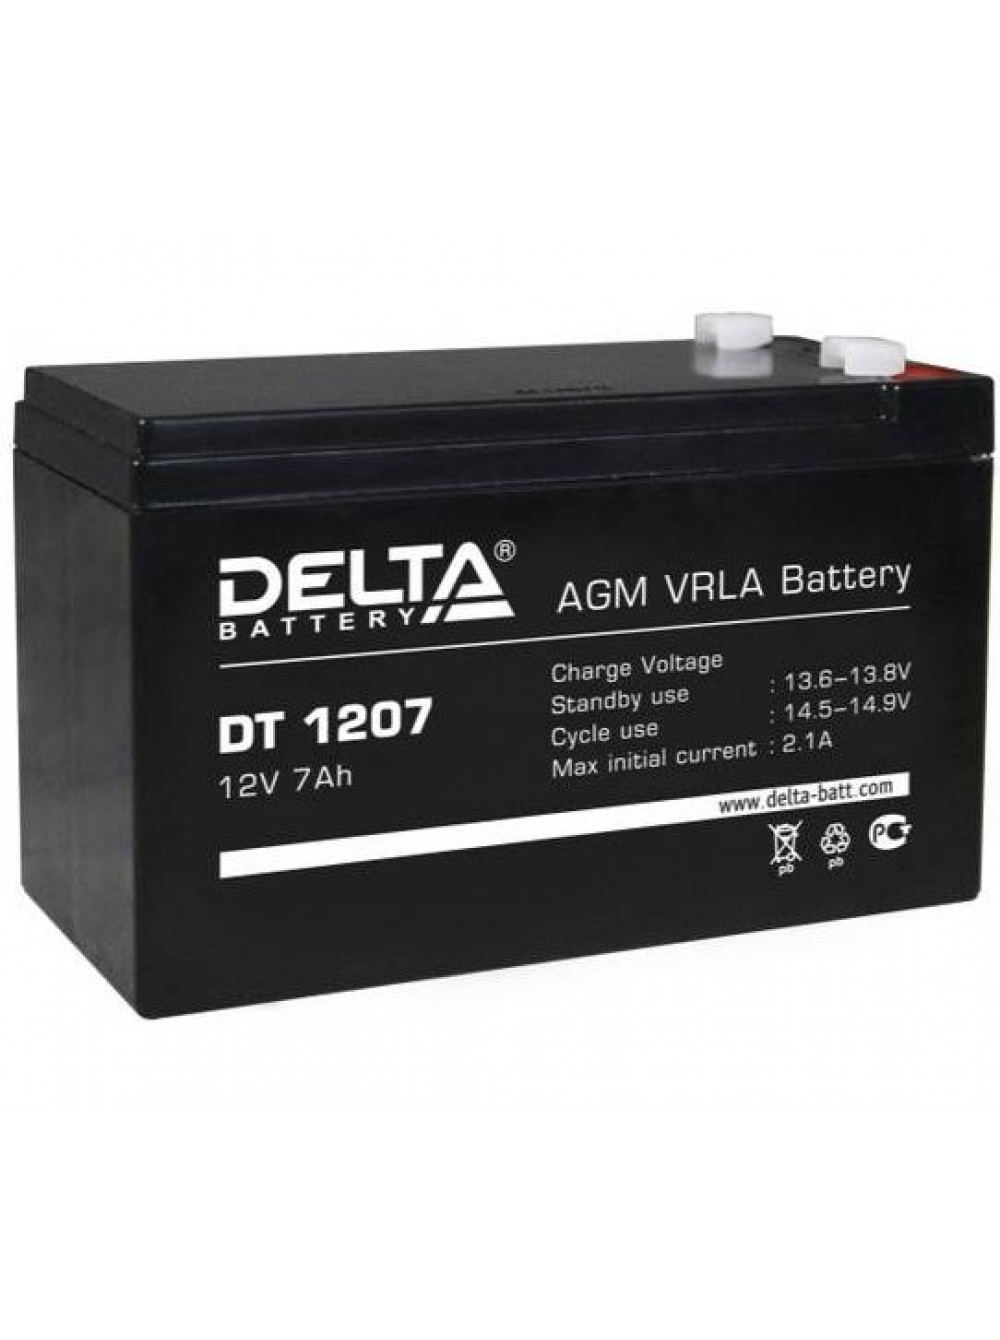 Купить аккумулятор 1207. Delta DT 1207. Delta DT 1207 (12v / 7ah). DT 1207 аккумулятор 12в/7ач. Аккумулятор Дельта 12в 7ач.